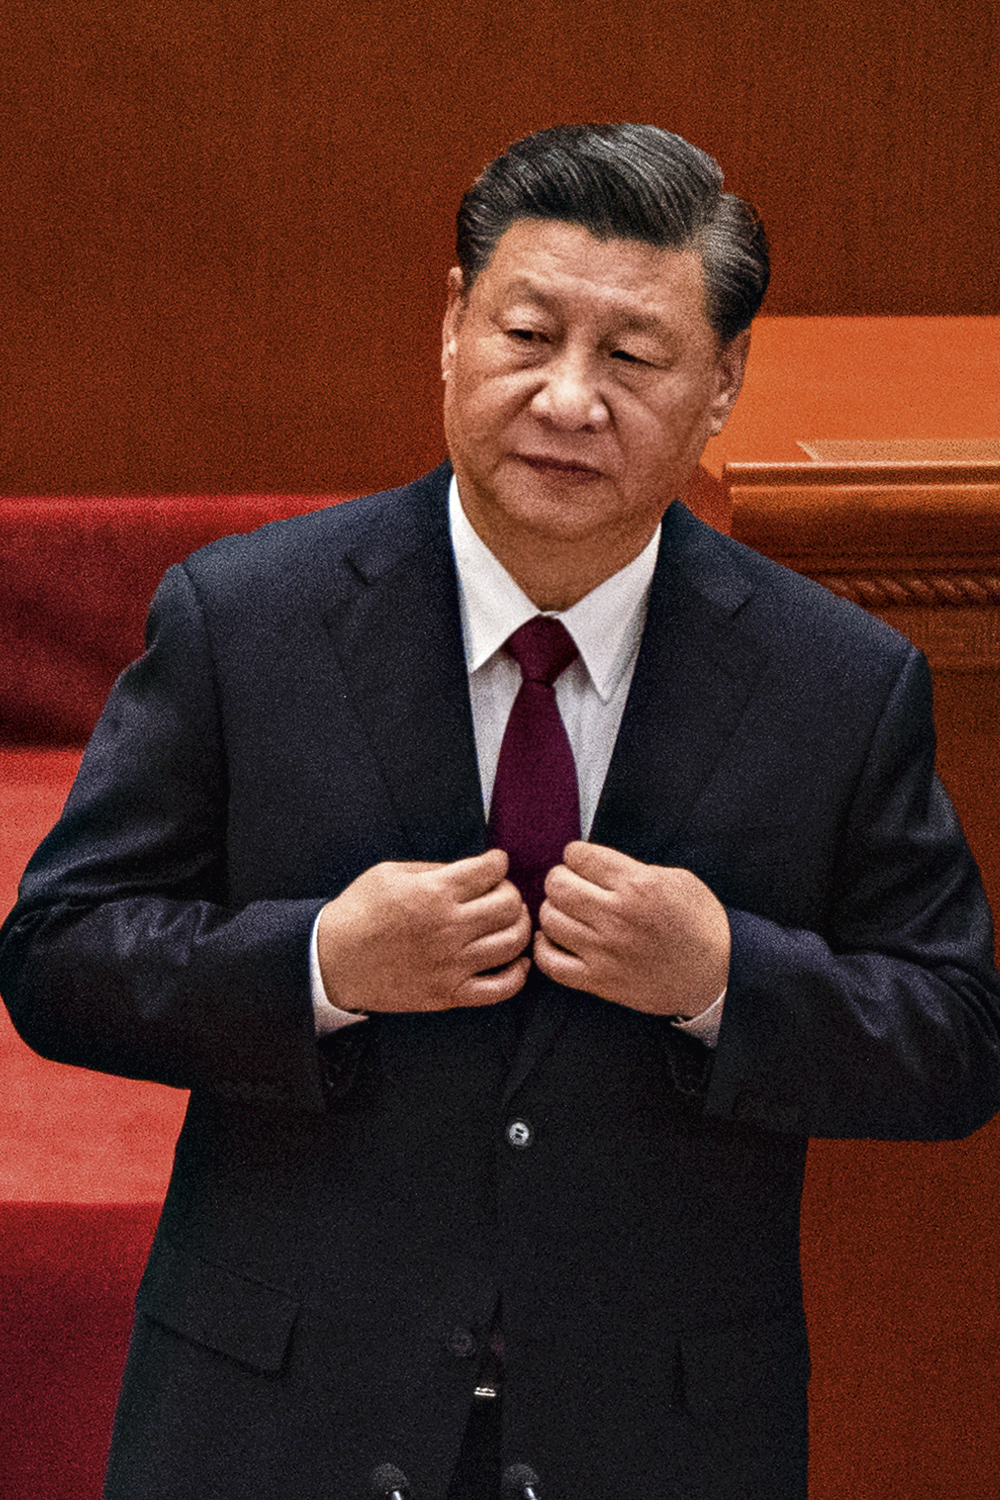 MEDIDA RADICAL - Xi Jinping: política de Covid Zero e lockdowns rigorosos -